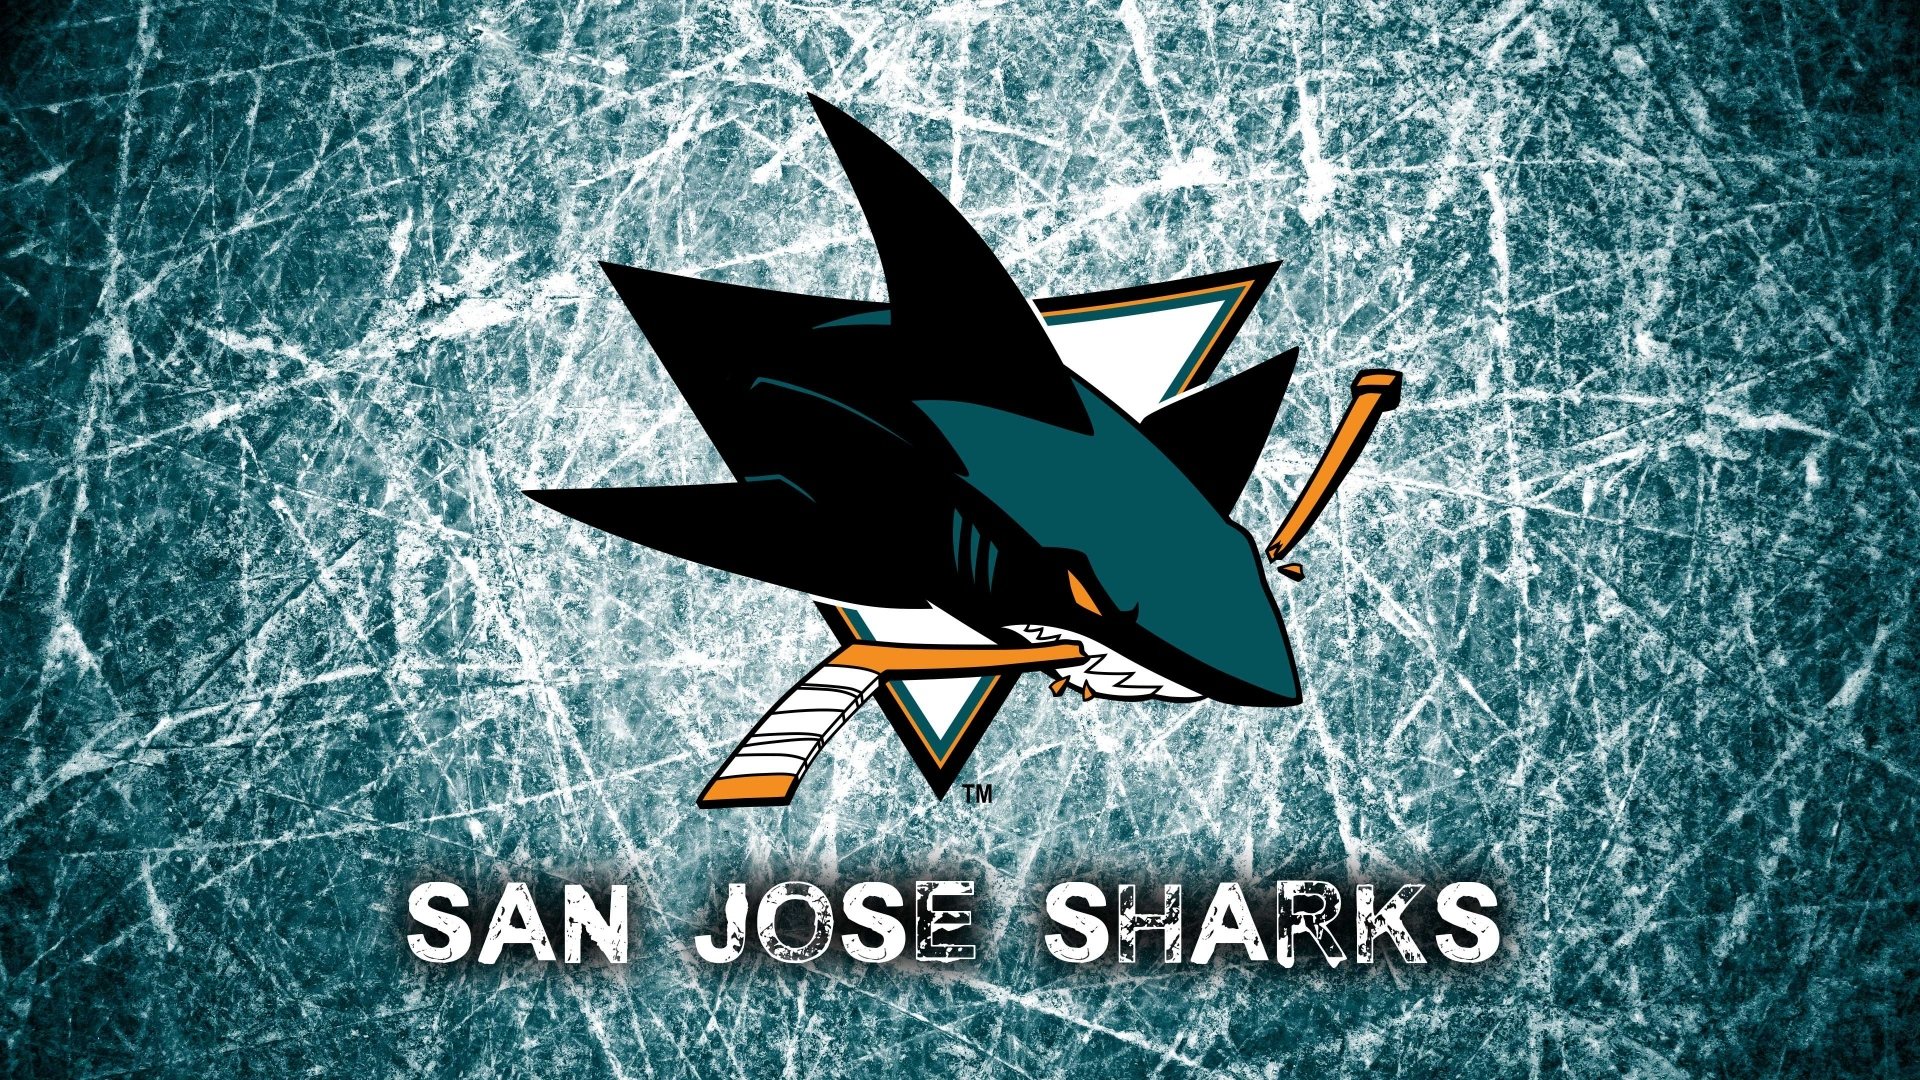 SAN JOSE SHARKS hockey nhl (18) wallpaper, 1920x1200, 358888